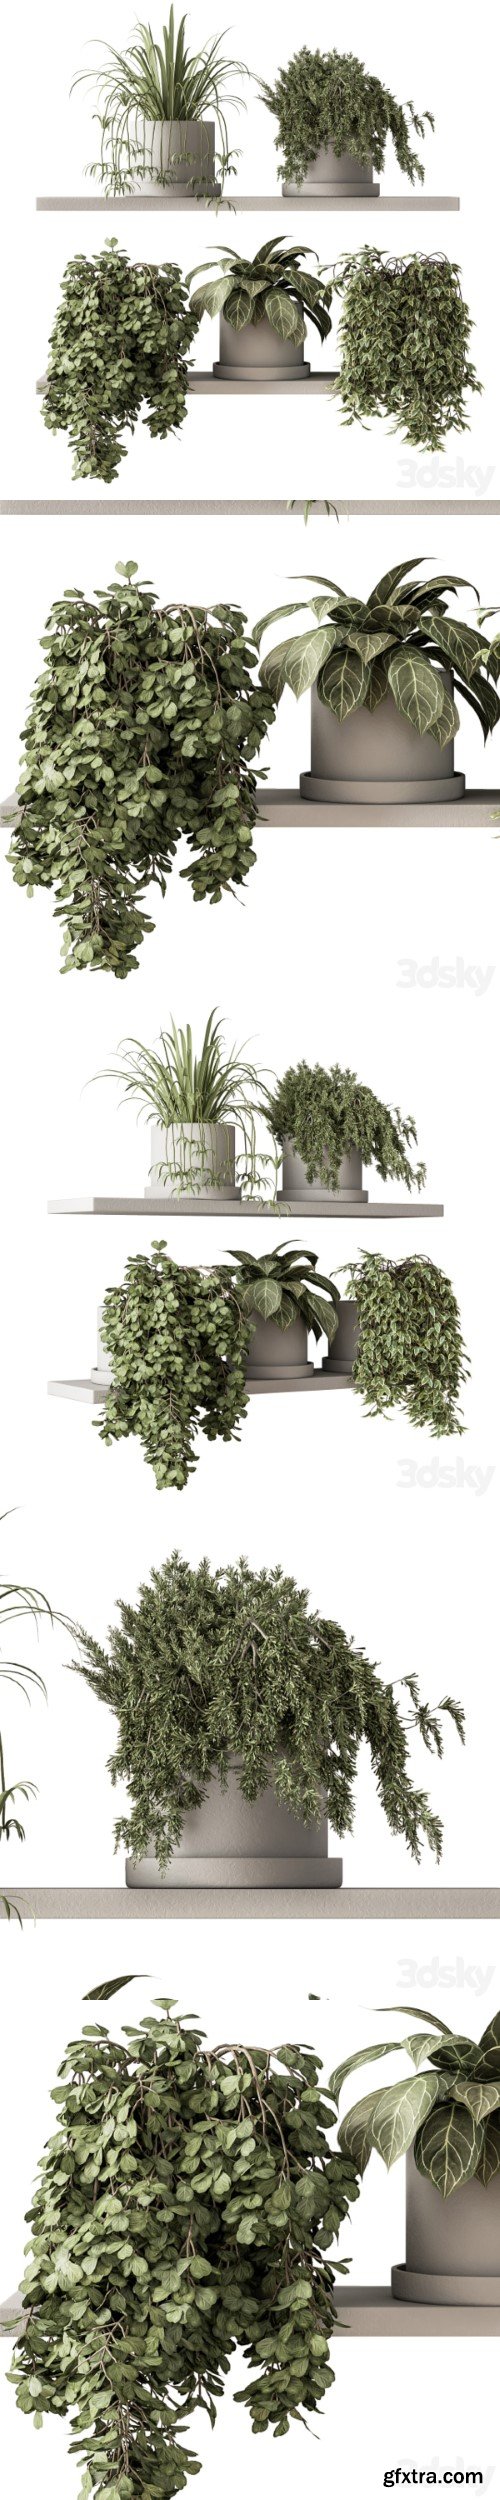 indoor Plant Set 281 - Plant pot on shelves